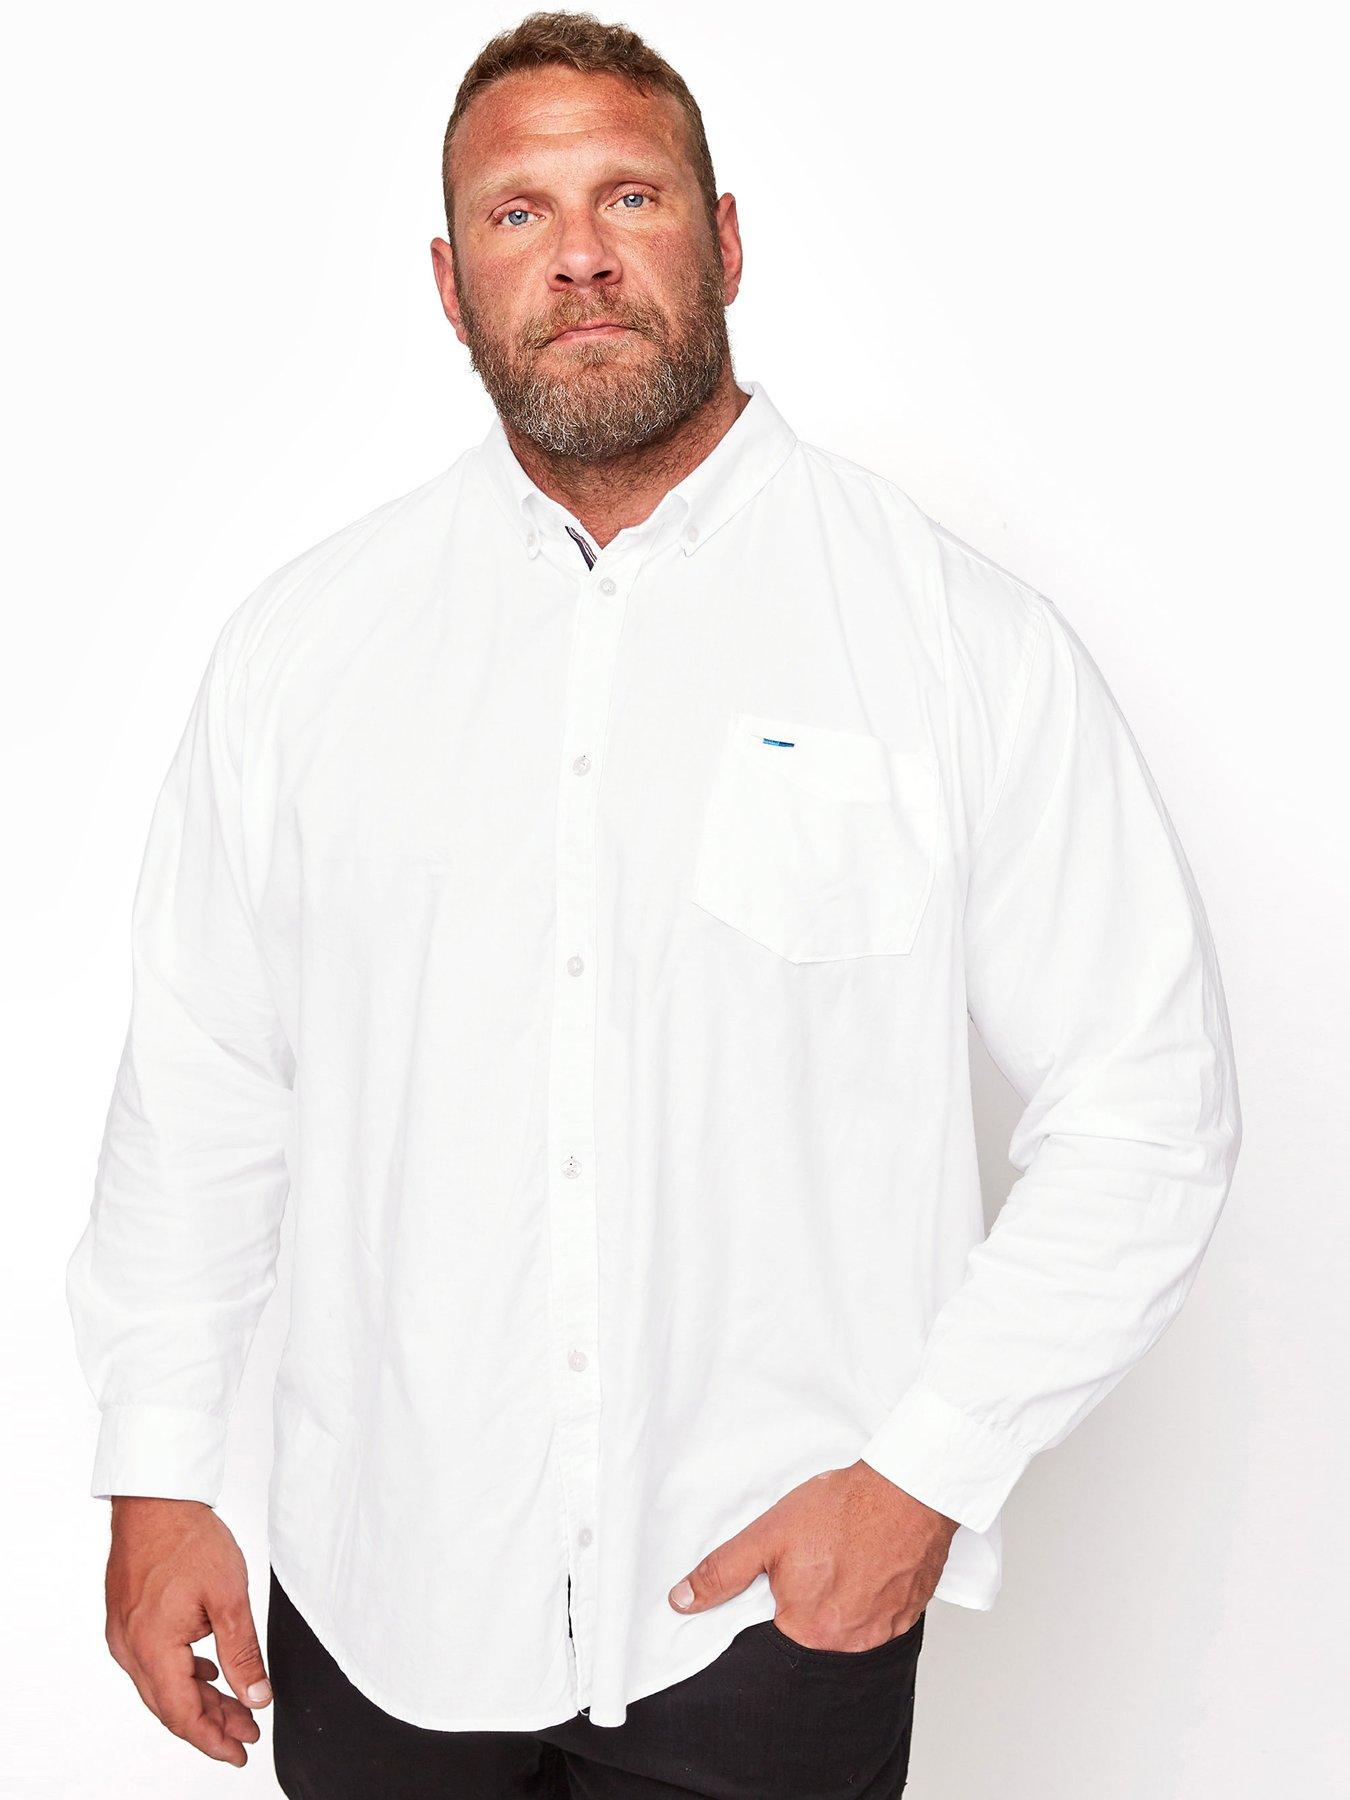 SportsX Men Vogue Oxford Button-Down Leisure Long Sleeve Top Dress Shirts